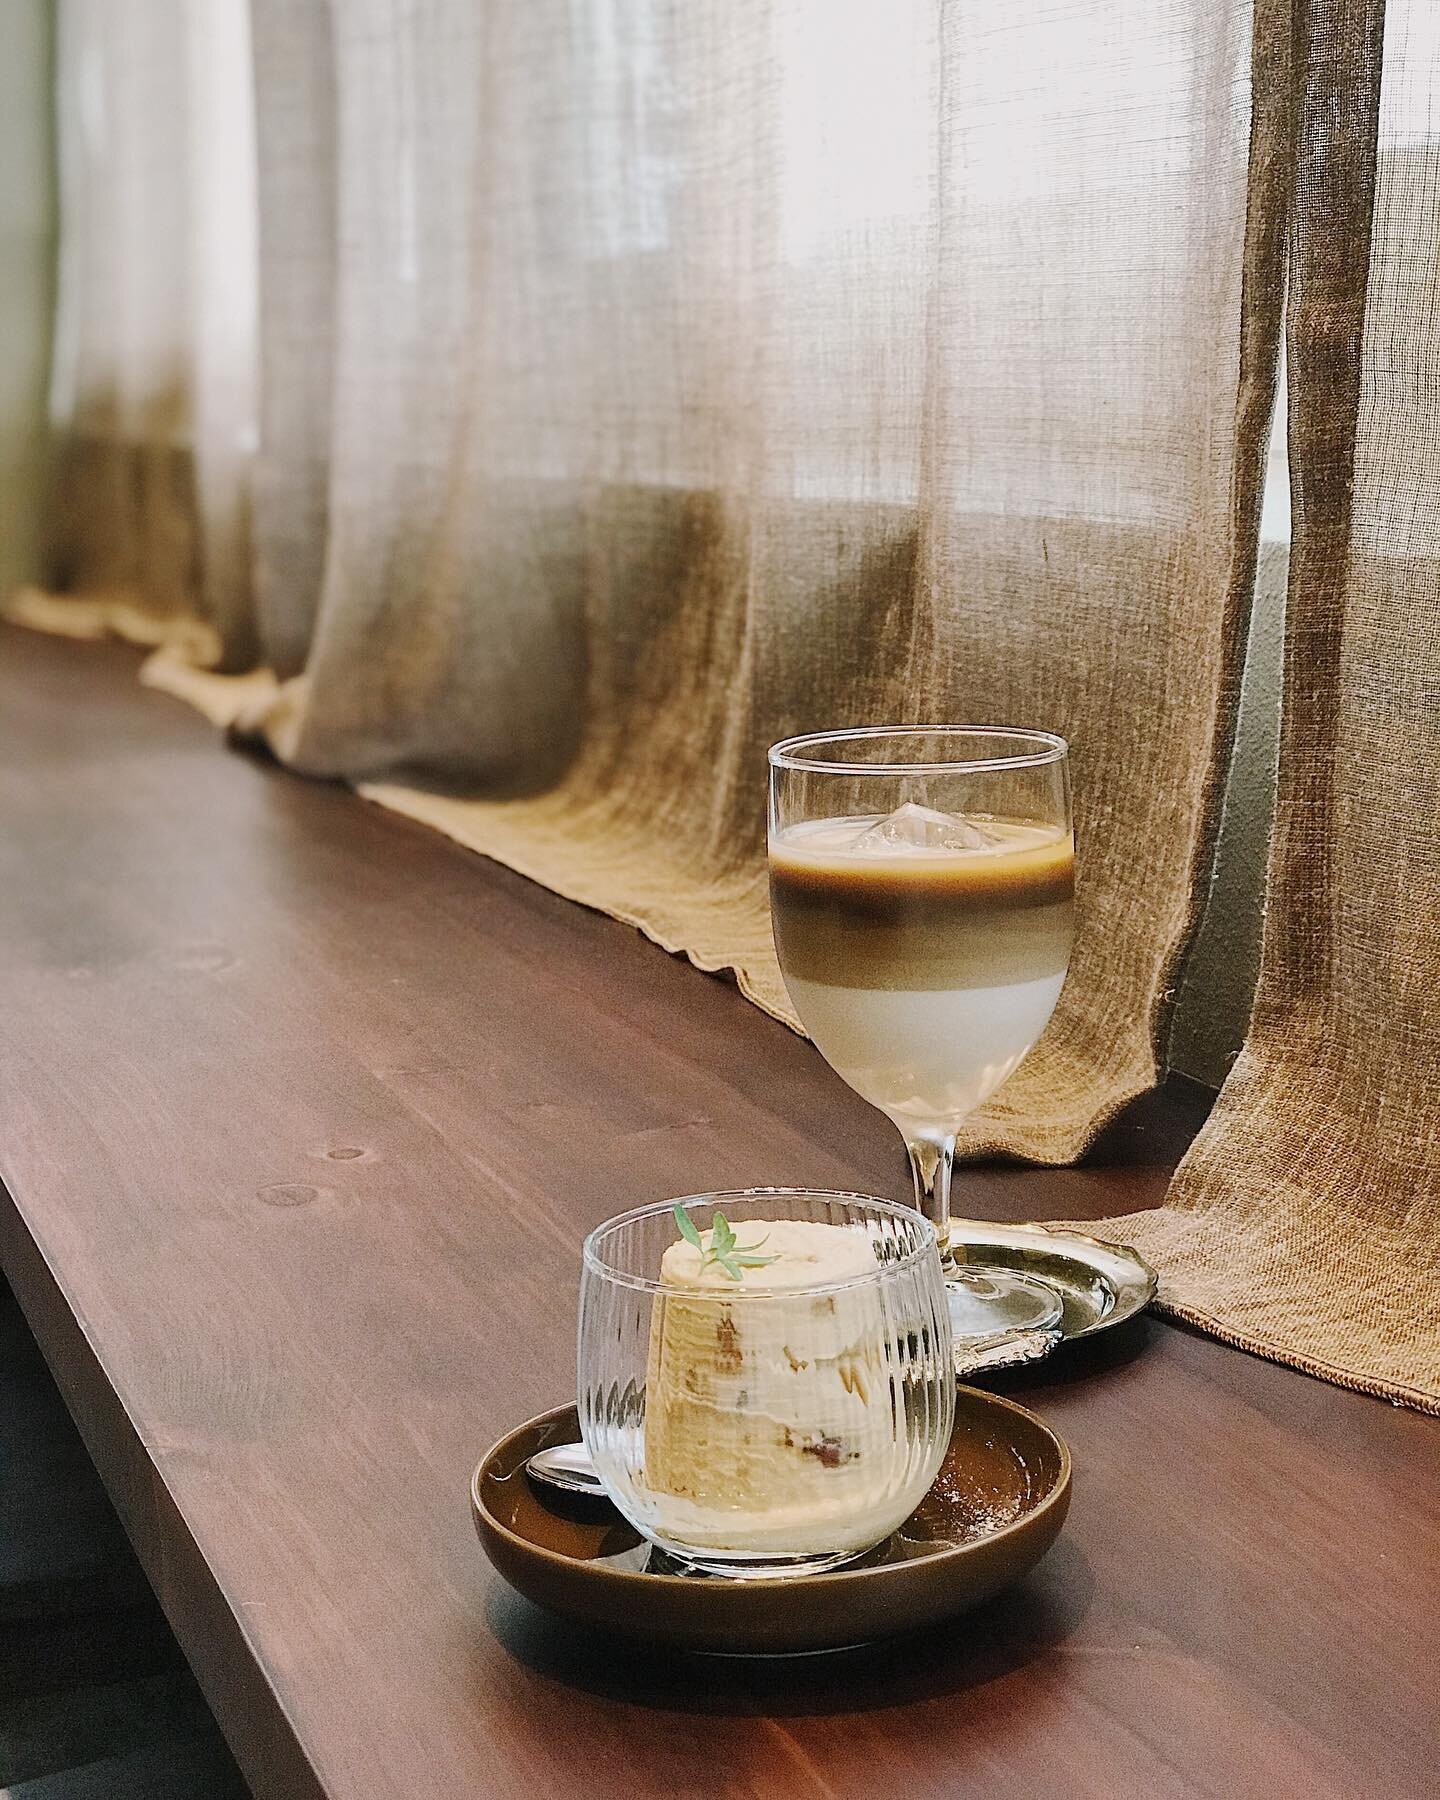 Delicious pecan semifreddo @ the newly open Dune Coffee, hidden in a five-story walkup near Dadaocheng

#台北 #台北咖啡廳 #台北美食